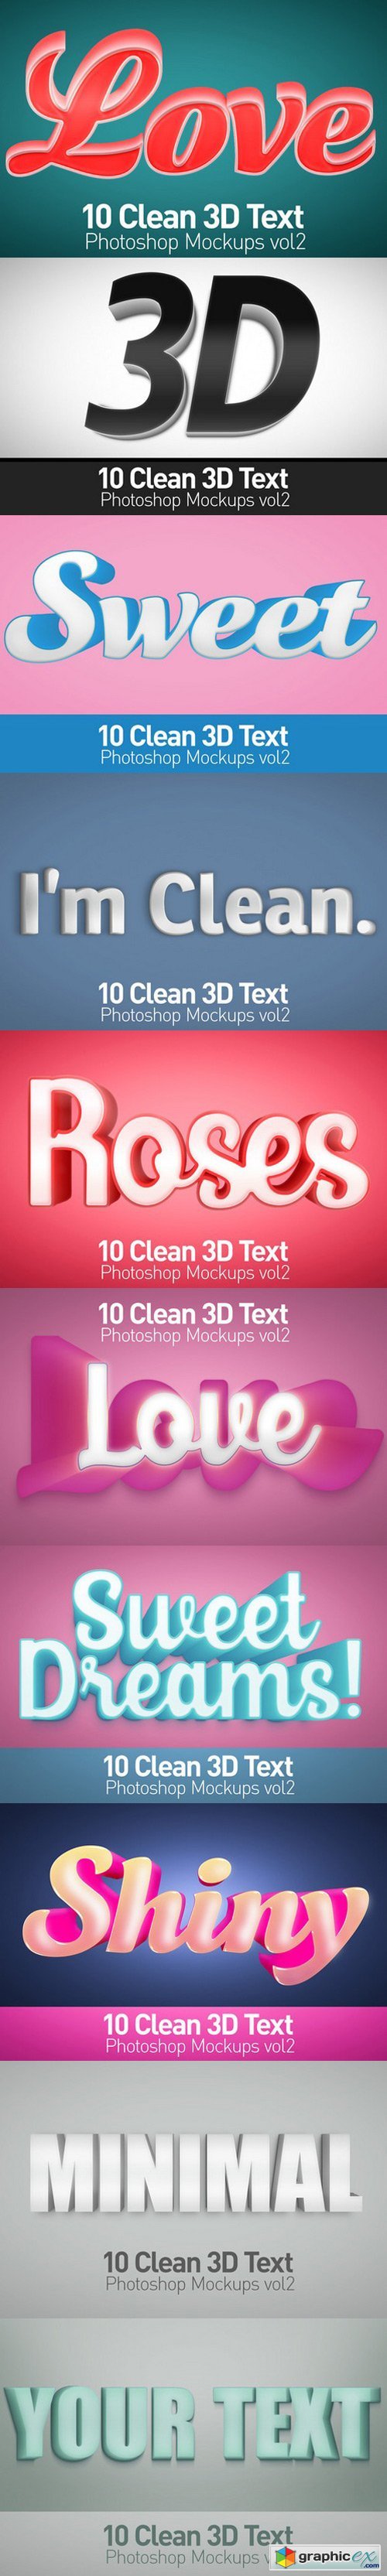 Clean 3D Photoshop Text Mockups Vol2